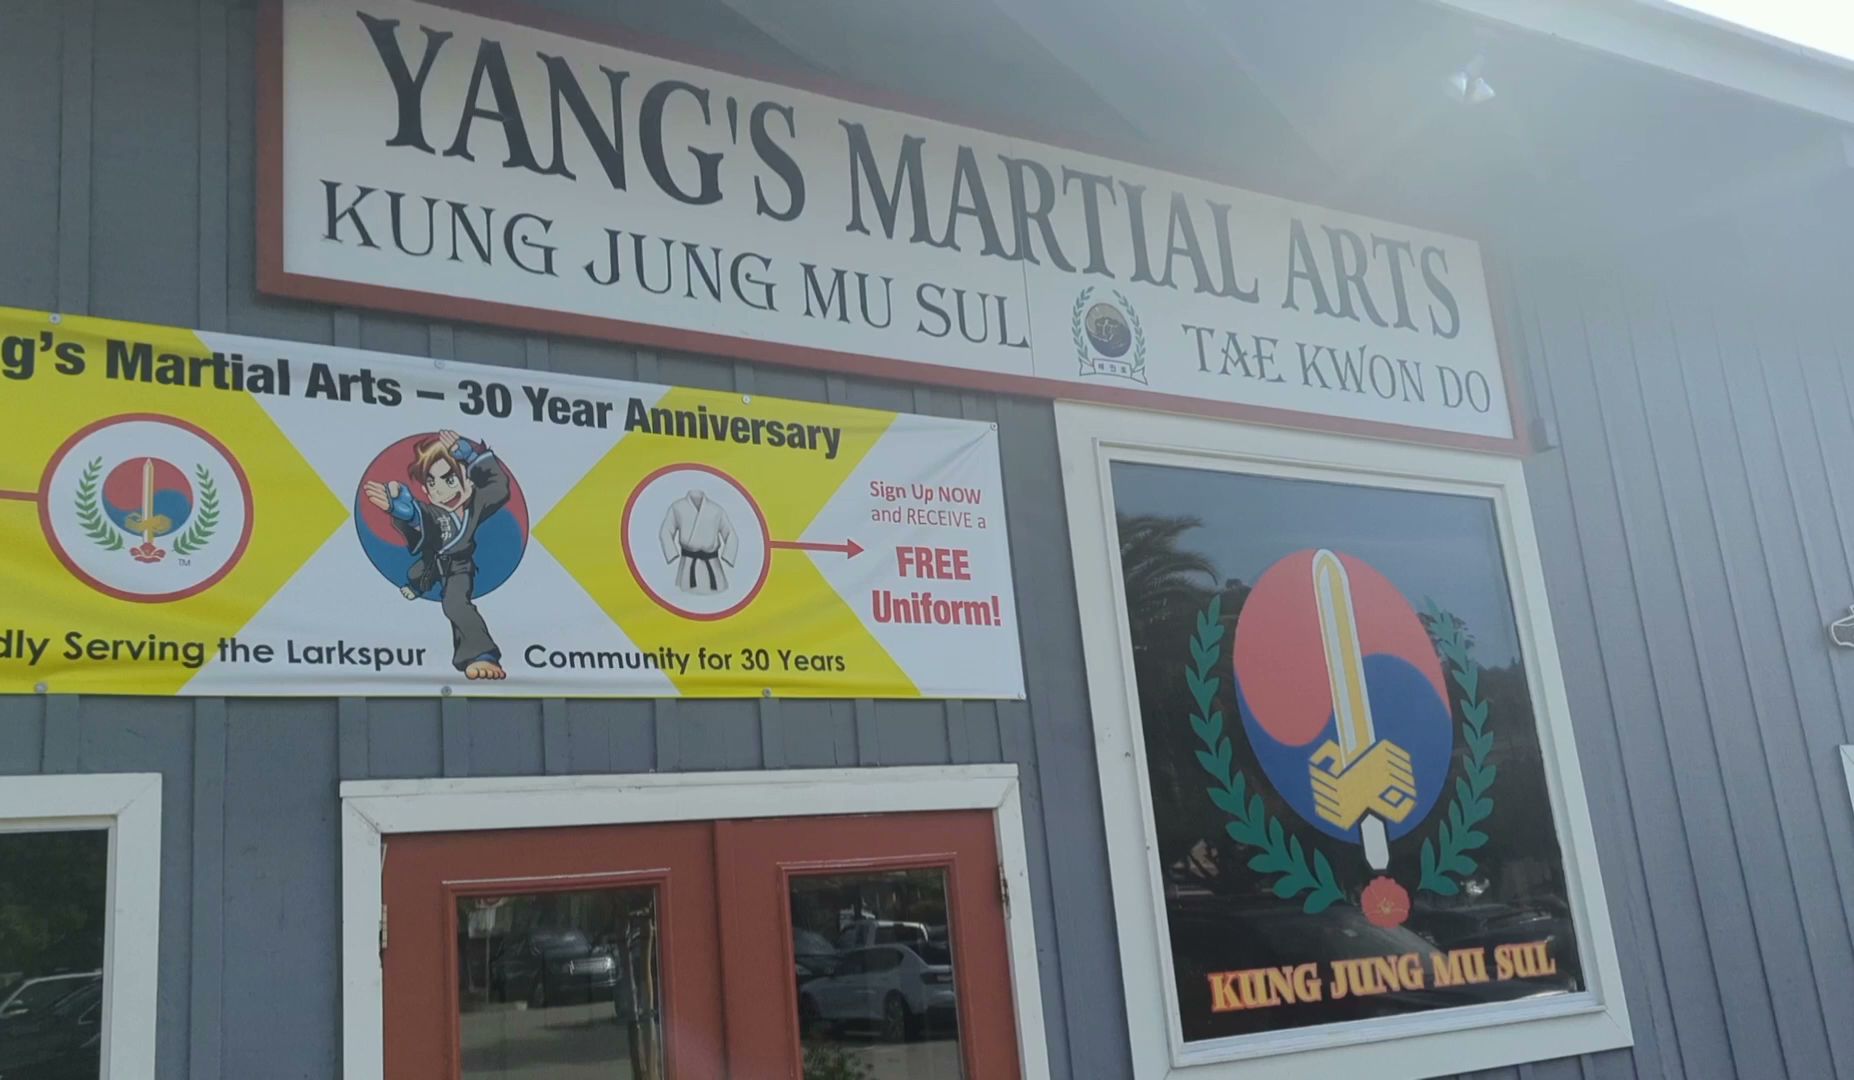 Yang's Martial Arts Academy 548 Magnolia Ave, Larkspur California 94939